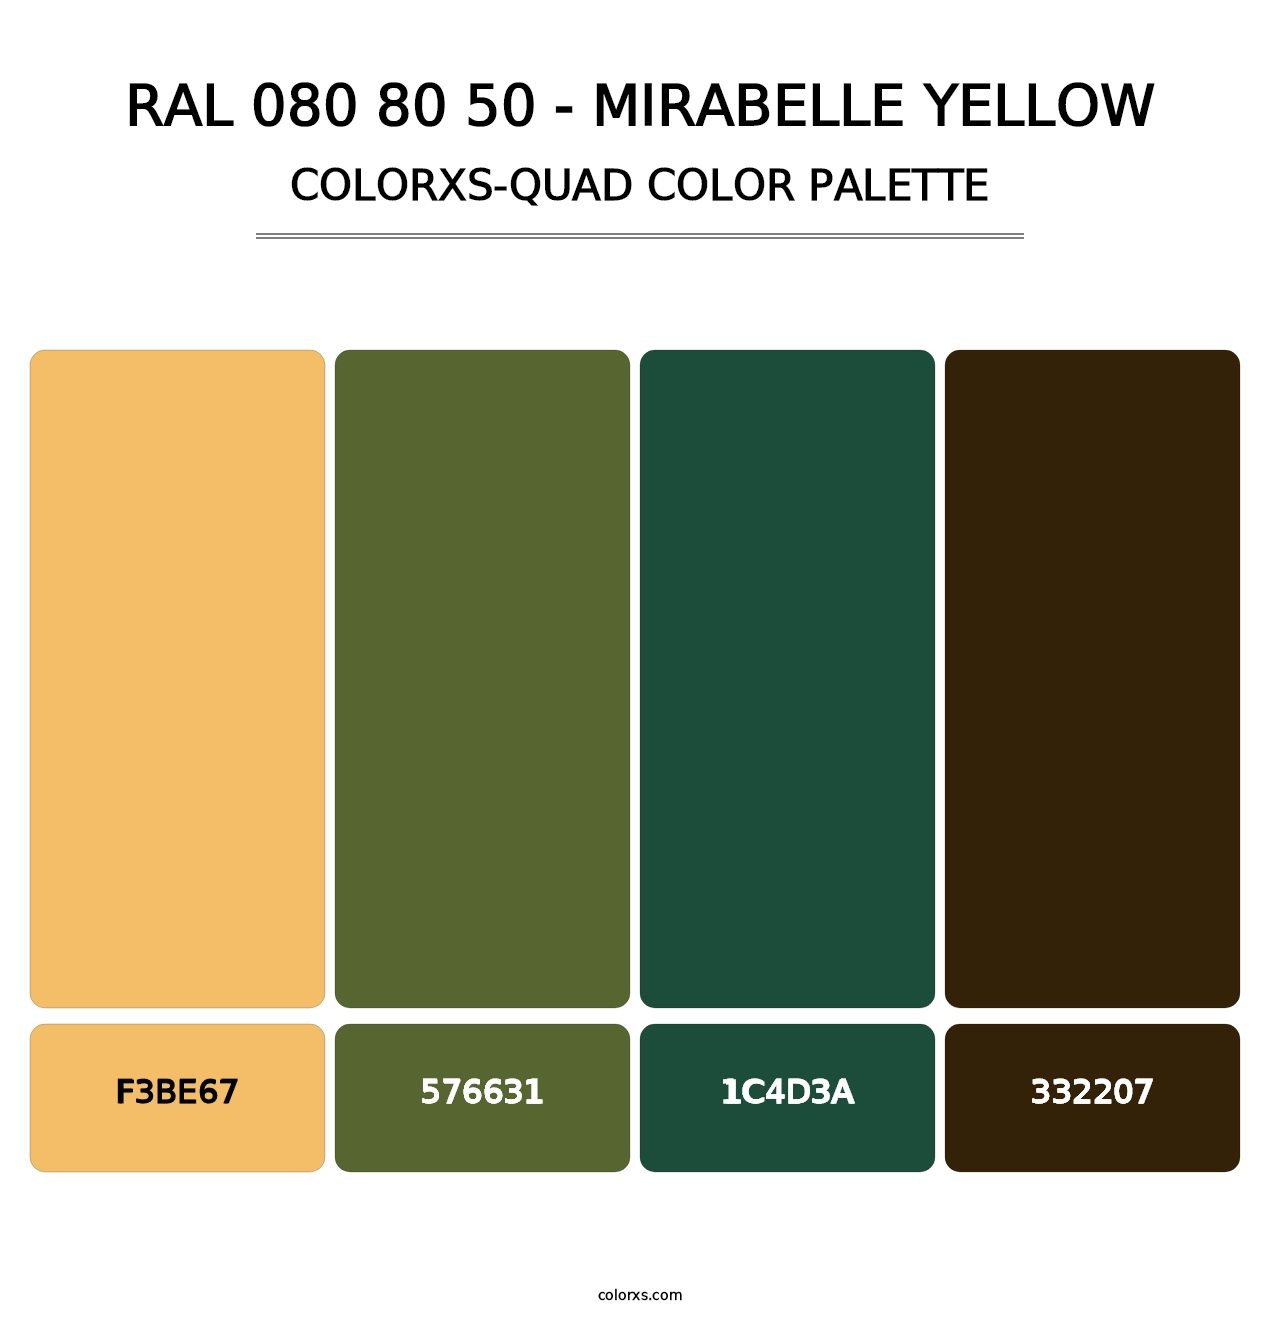 RAL 080 80 50 - Mirabelle Yellow - Colorxs Quad Palette